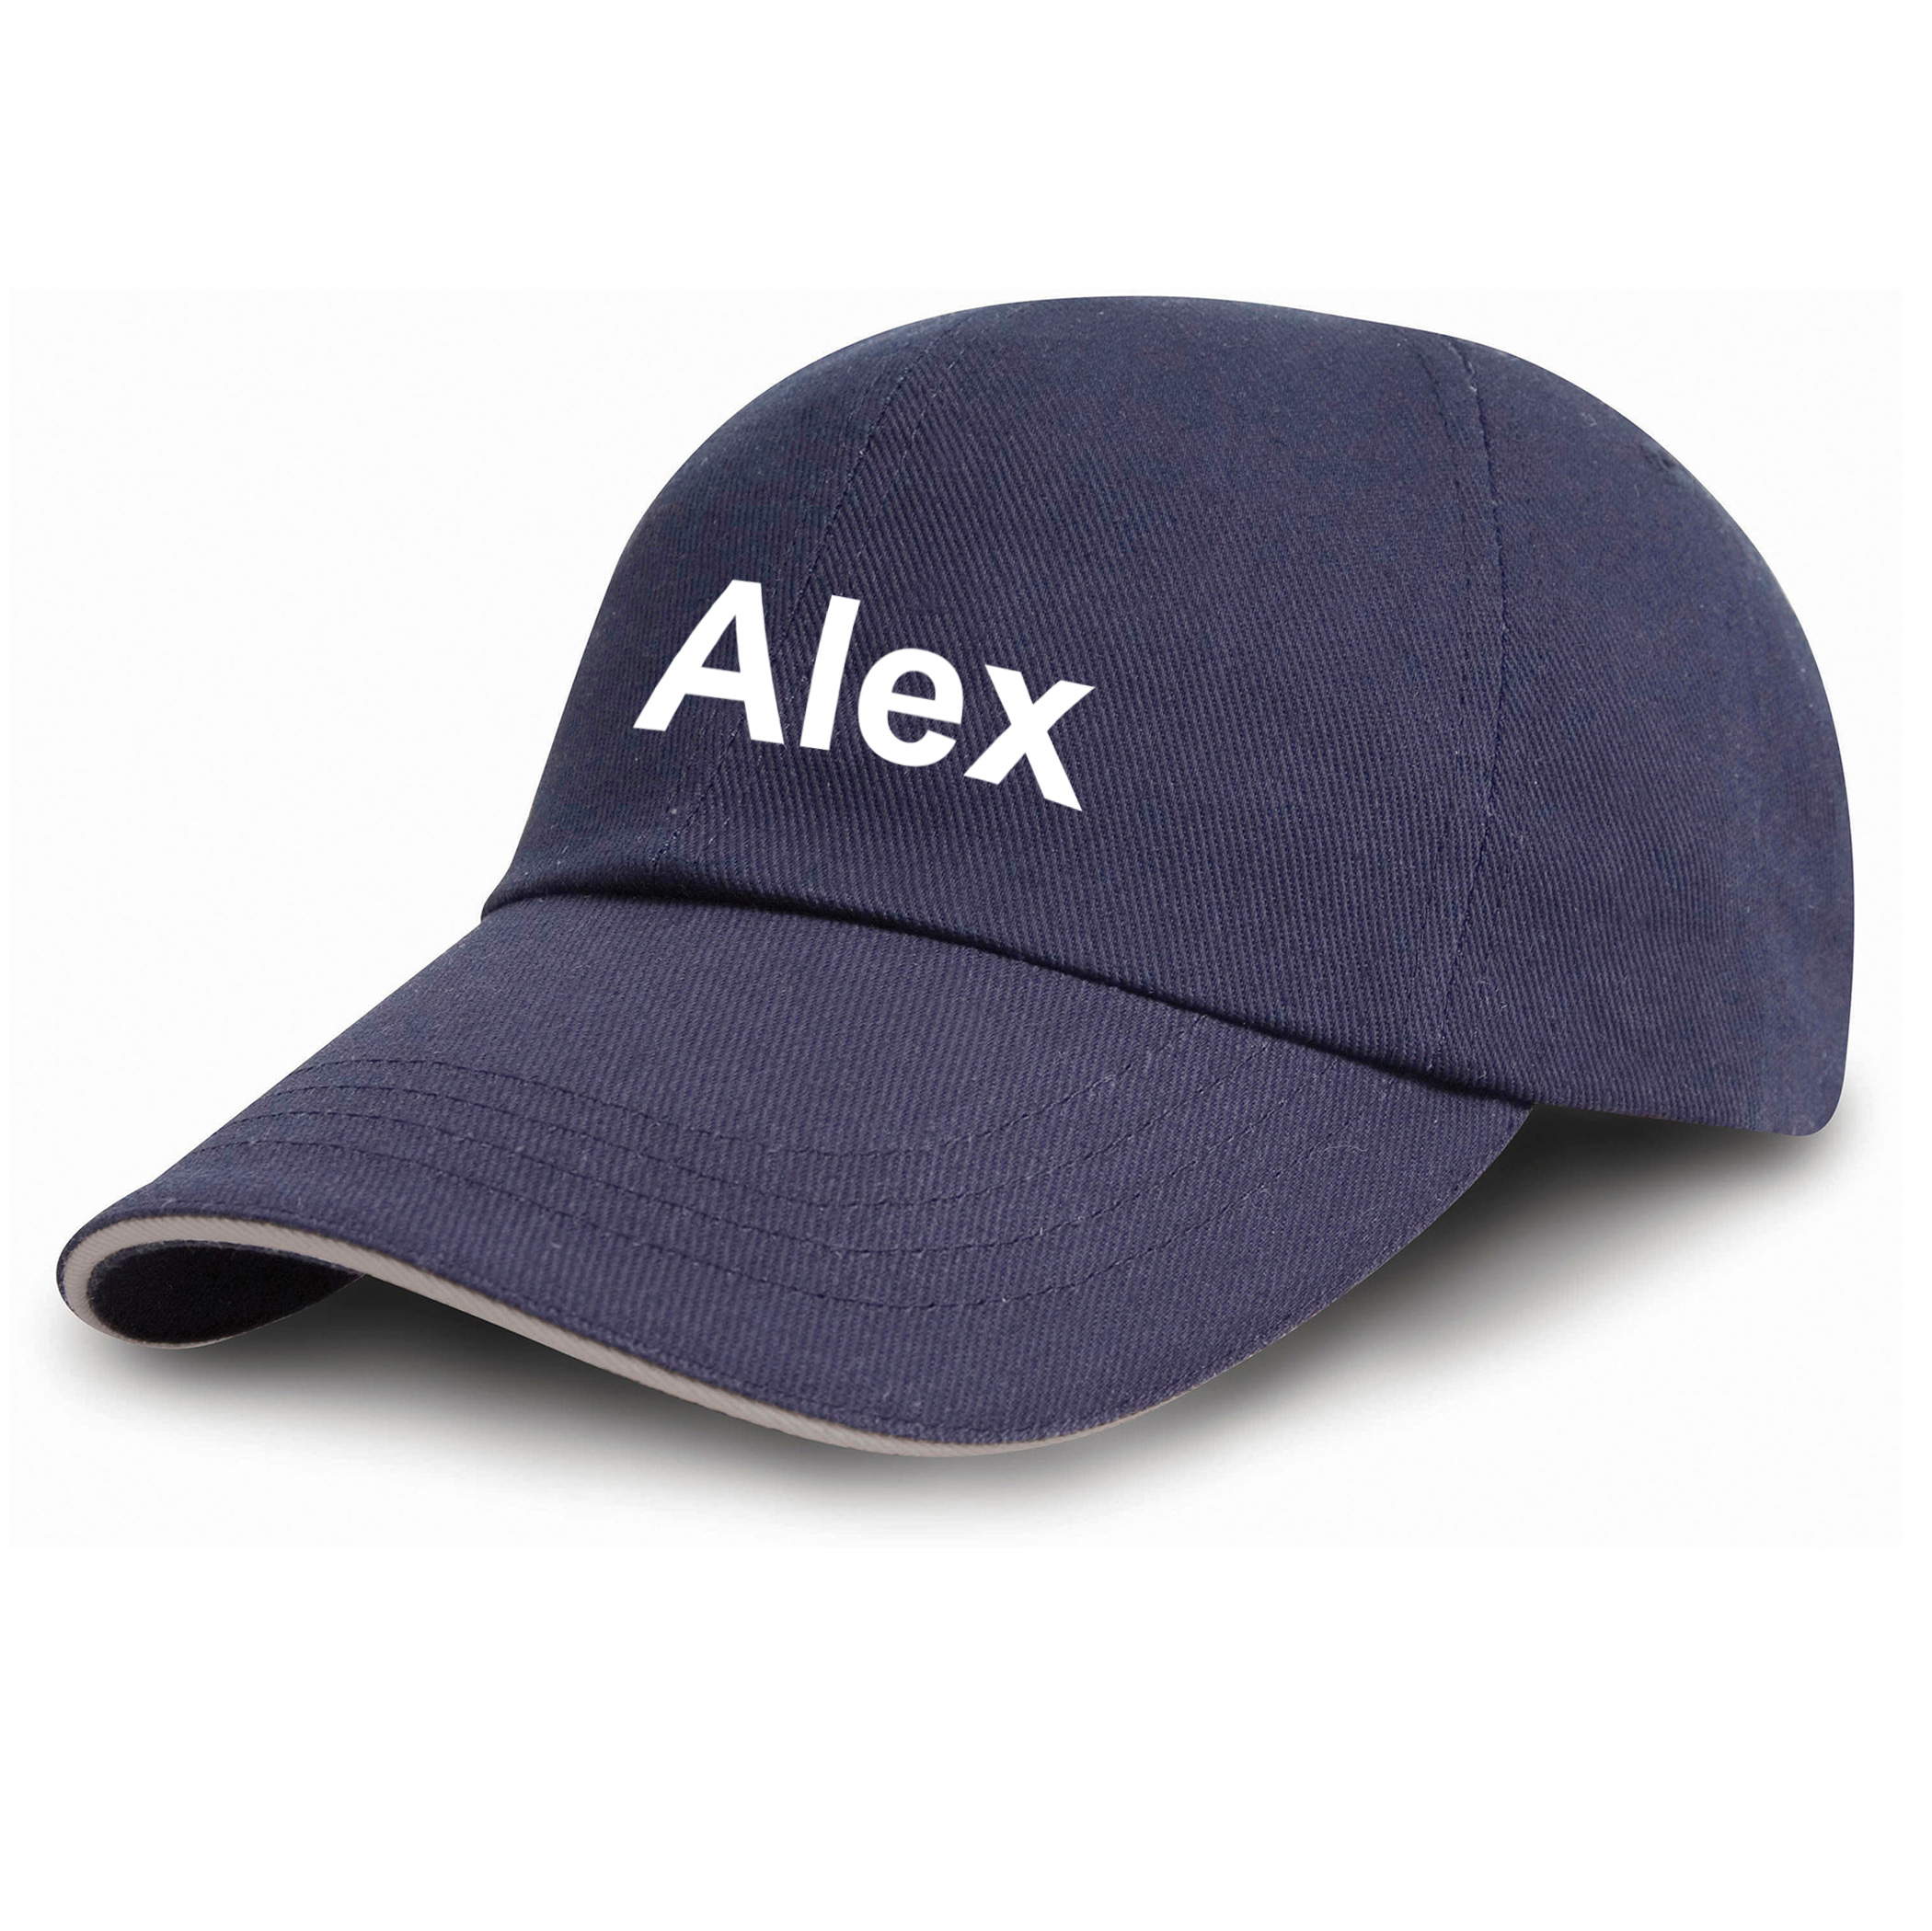 Baseball-Cap mit Namen | Bekleidung | Geschenke mit Namen